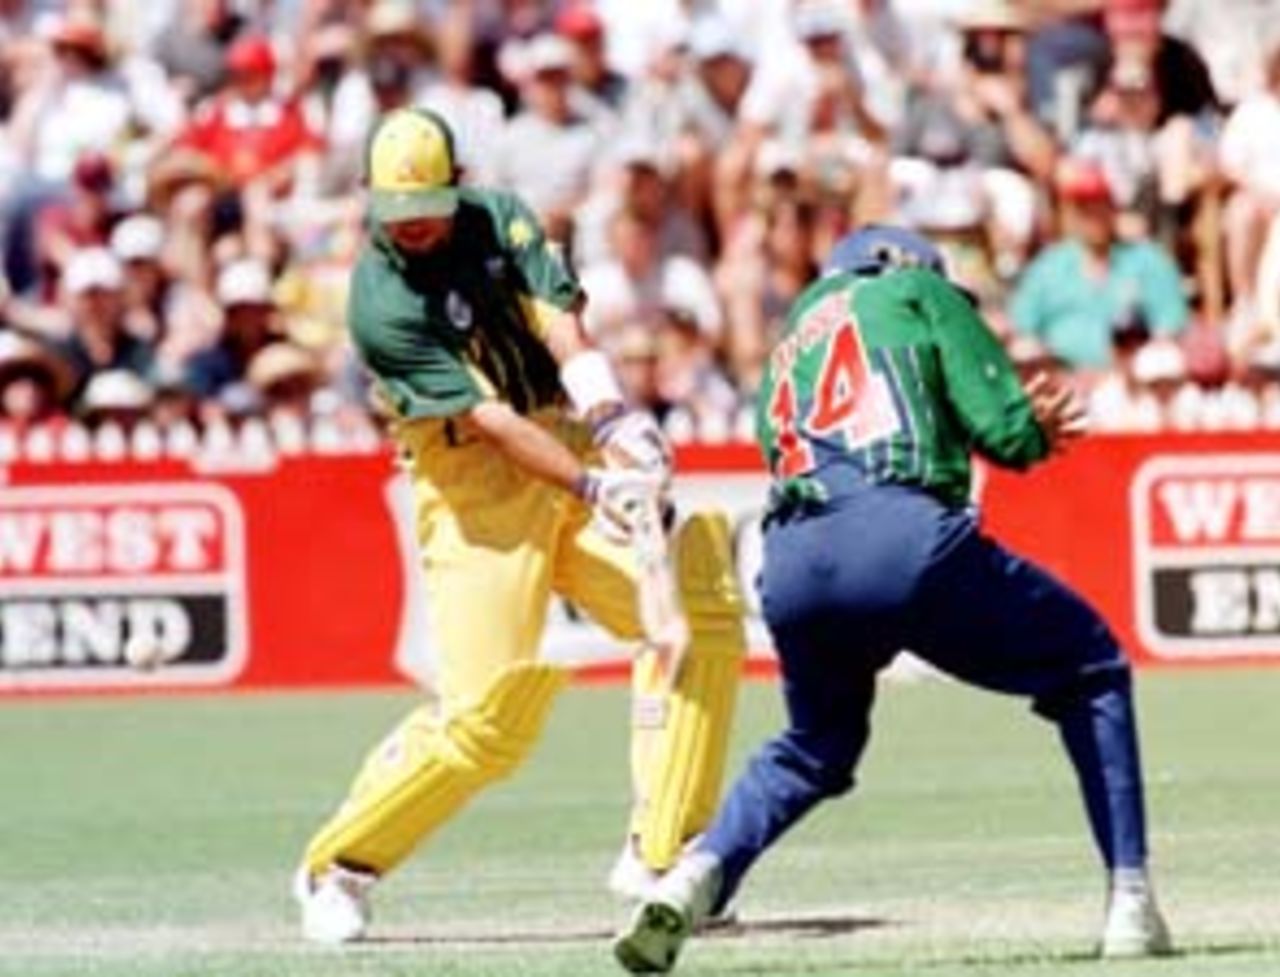 Australia v Pakistan, Carlton and United Series, match 13, 15 December 1996, Adelaide